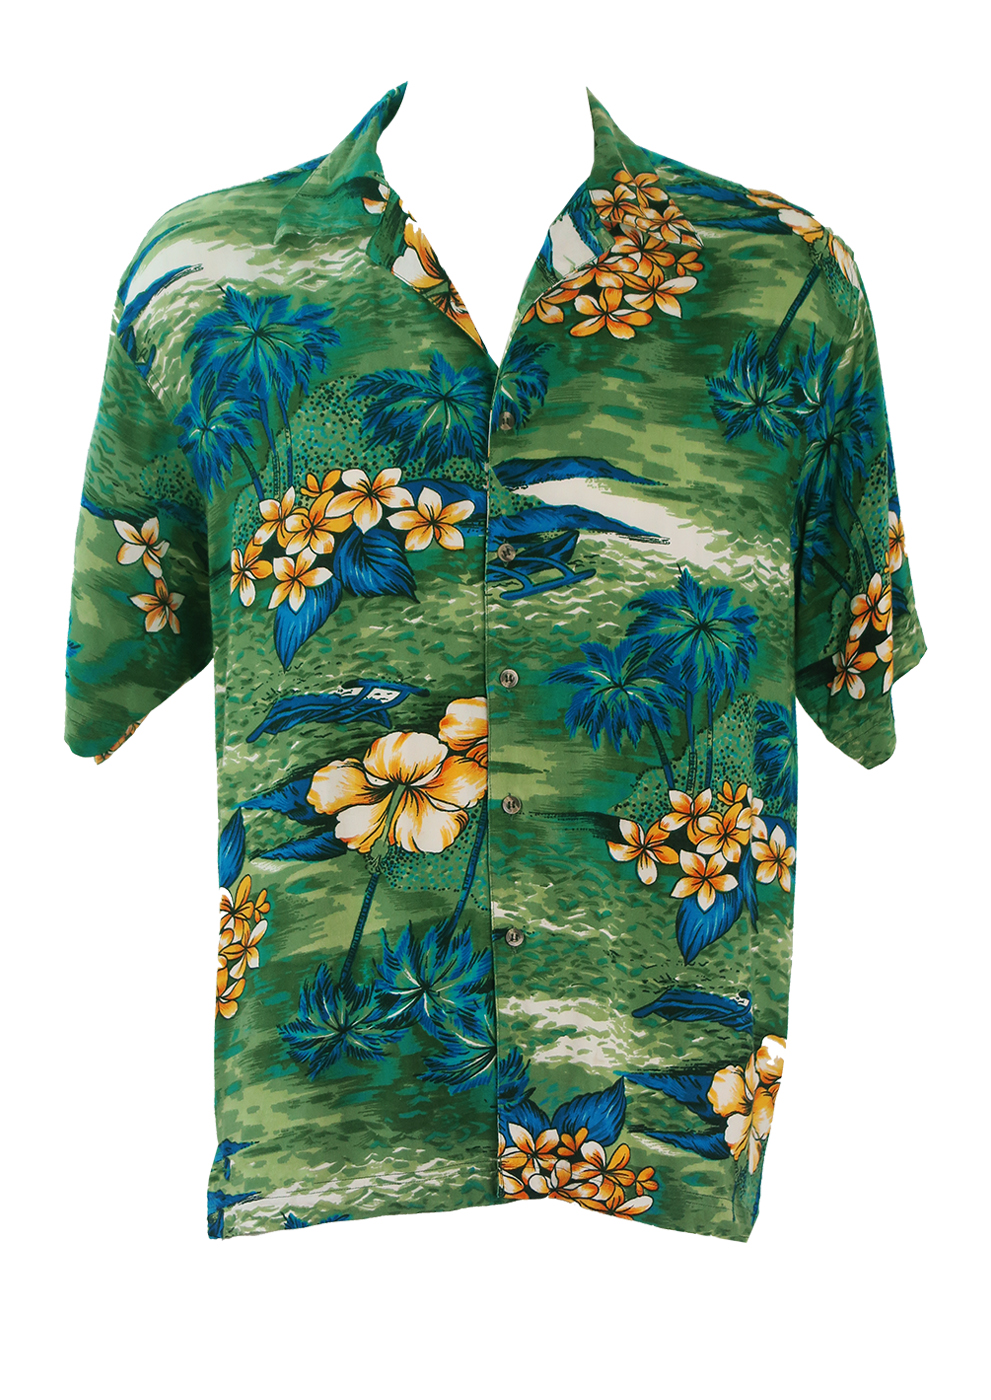 Green Hawaiian Shirt with Yellow Flower & Blue Palm Tree Print - M/L ...